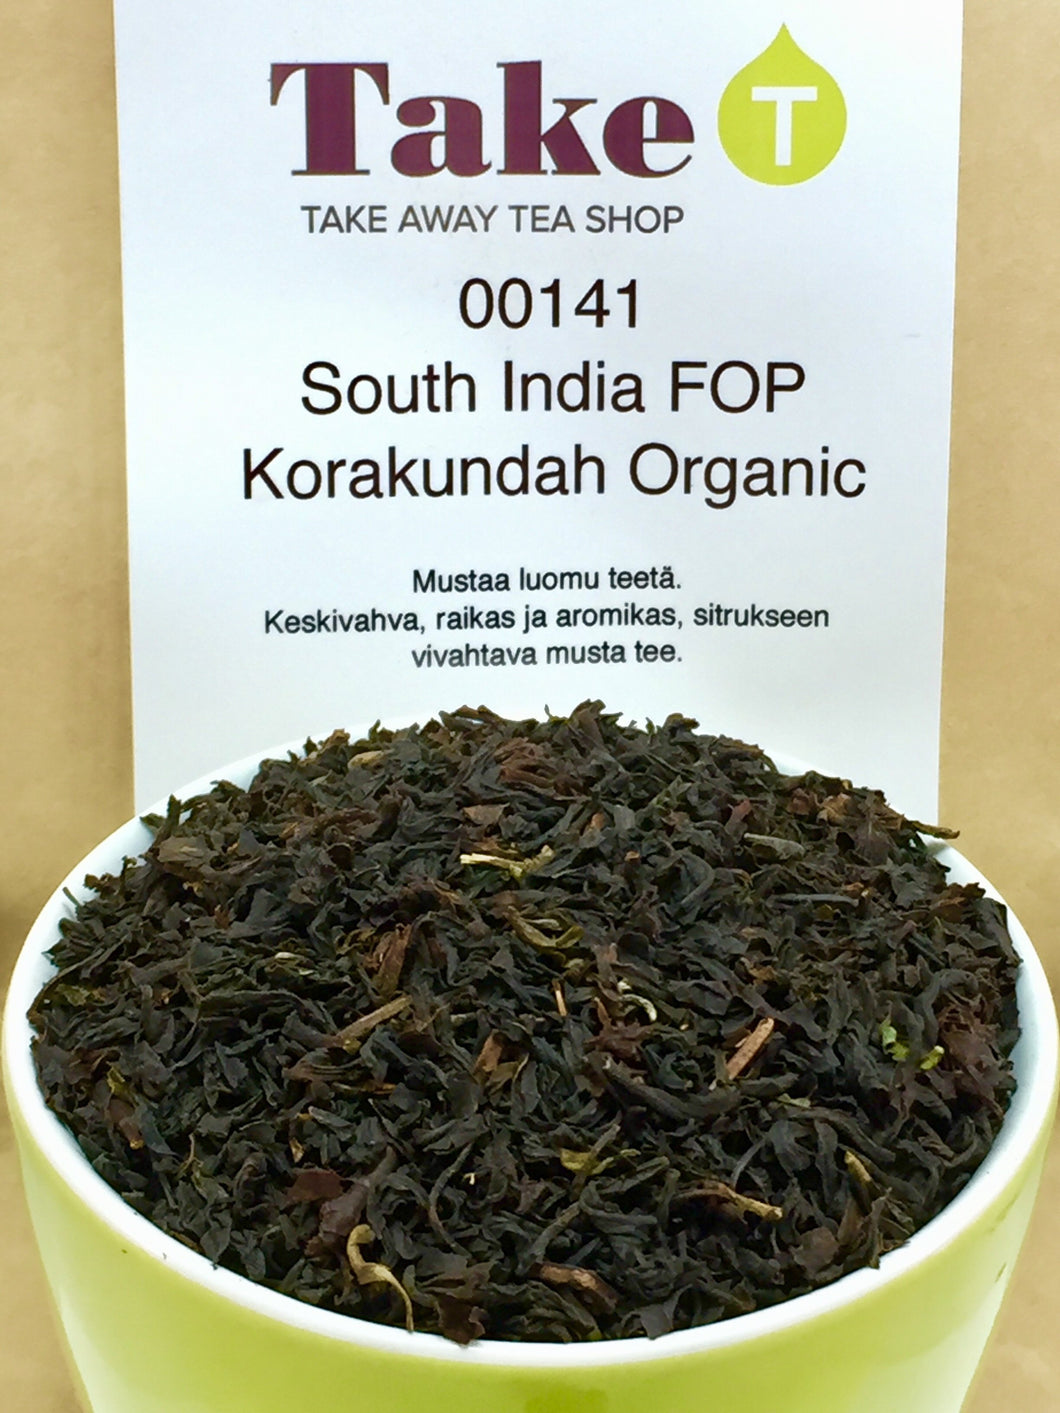 South Indian FOP Korakundah Organic